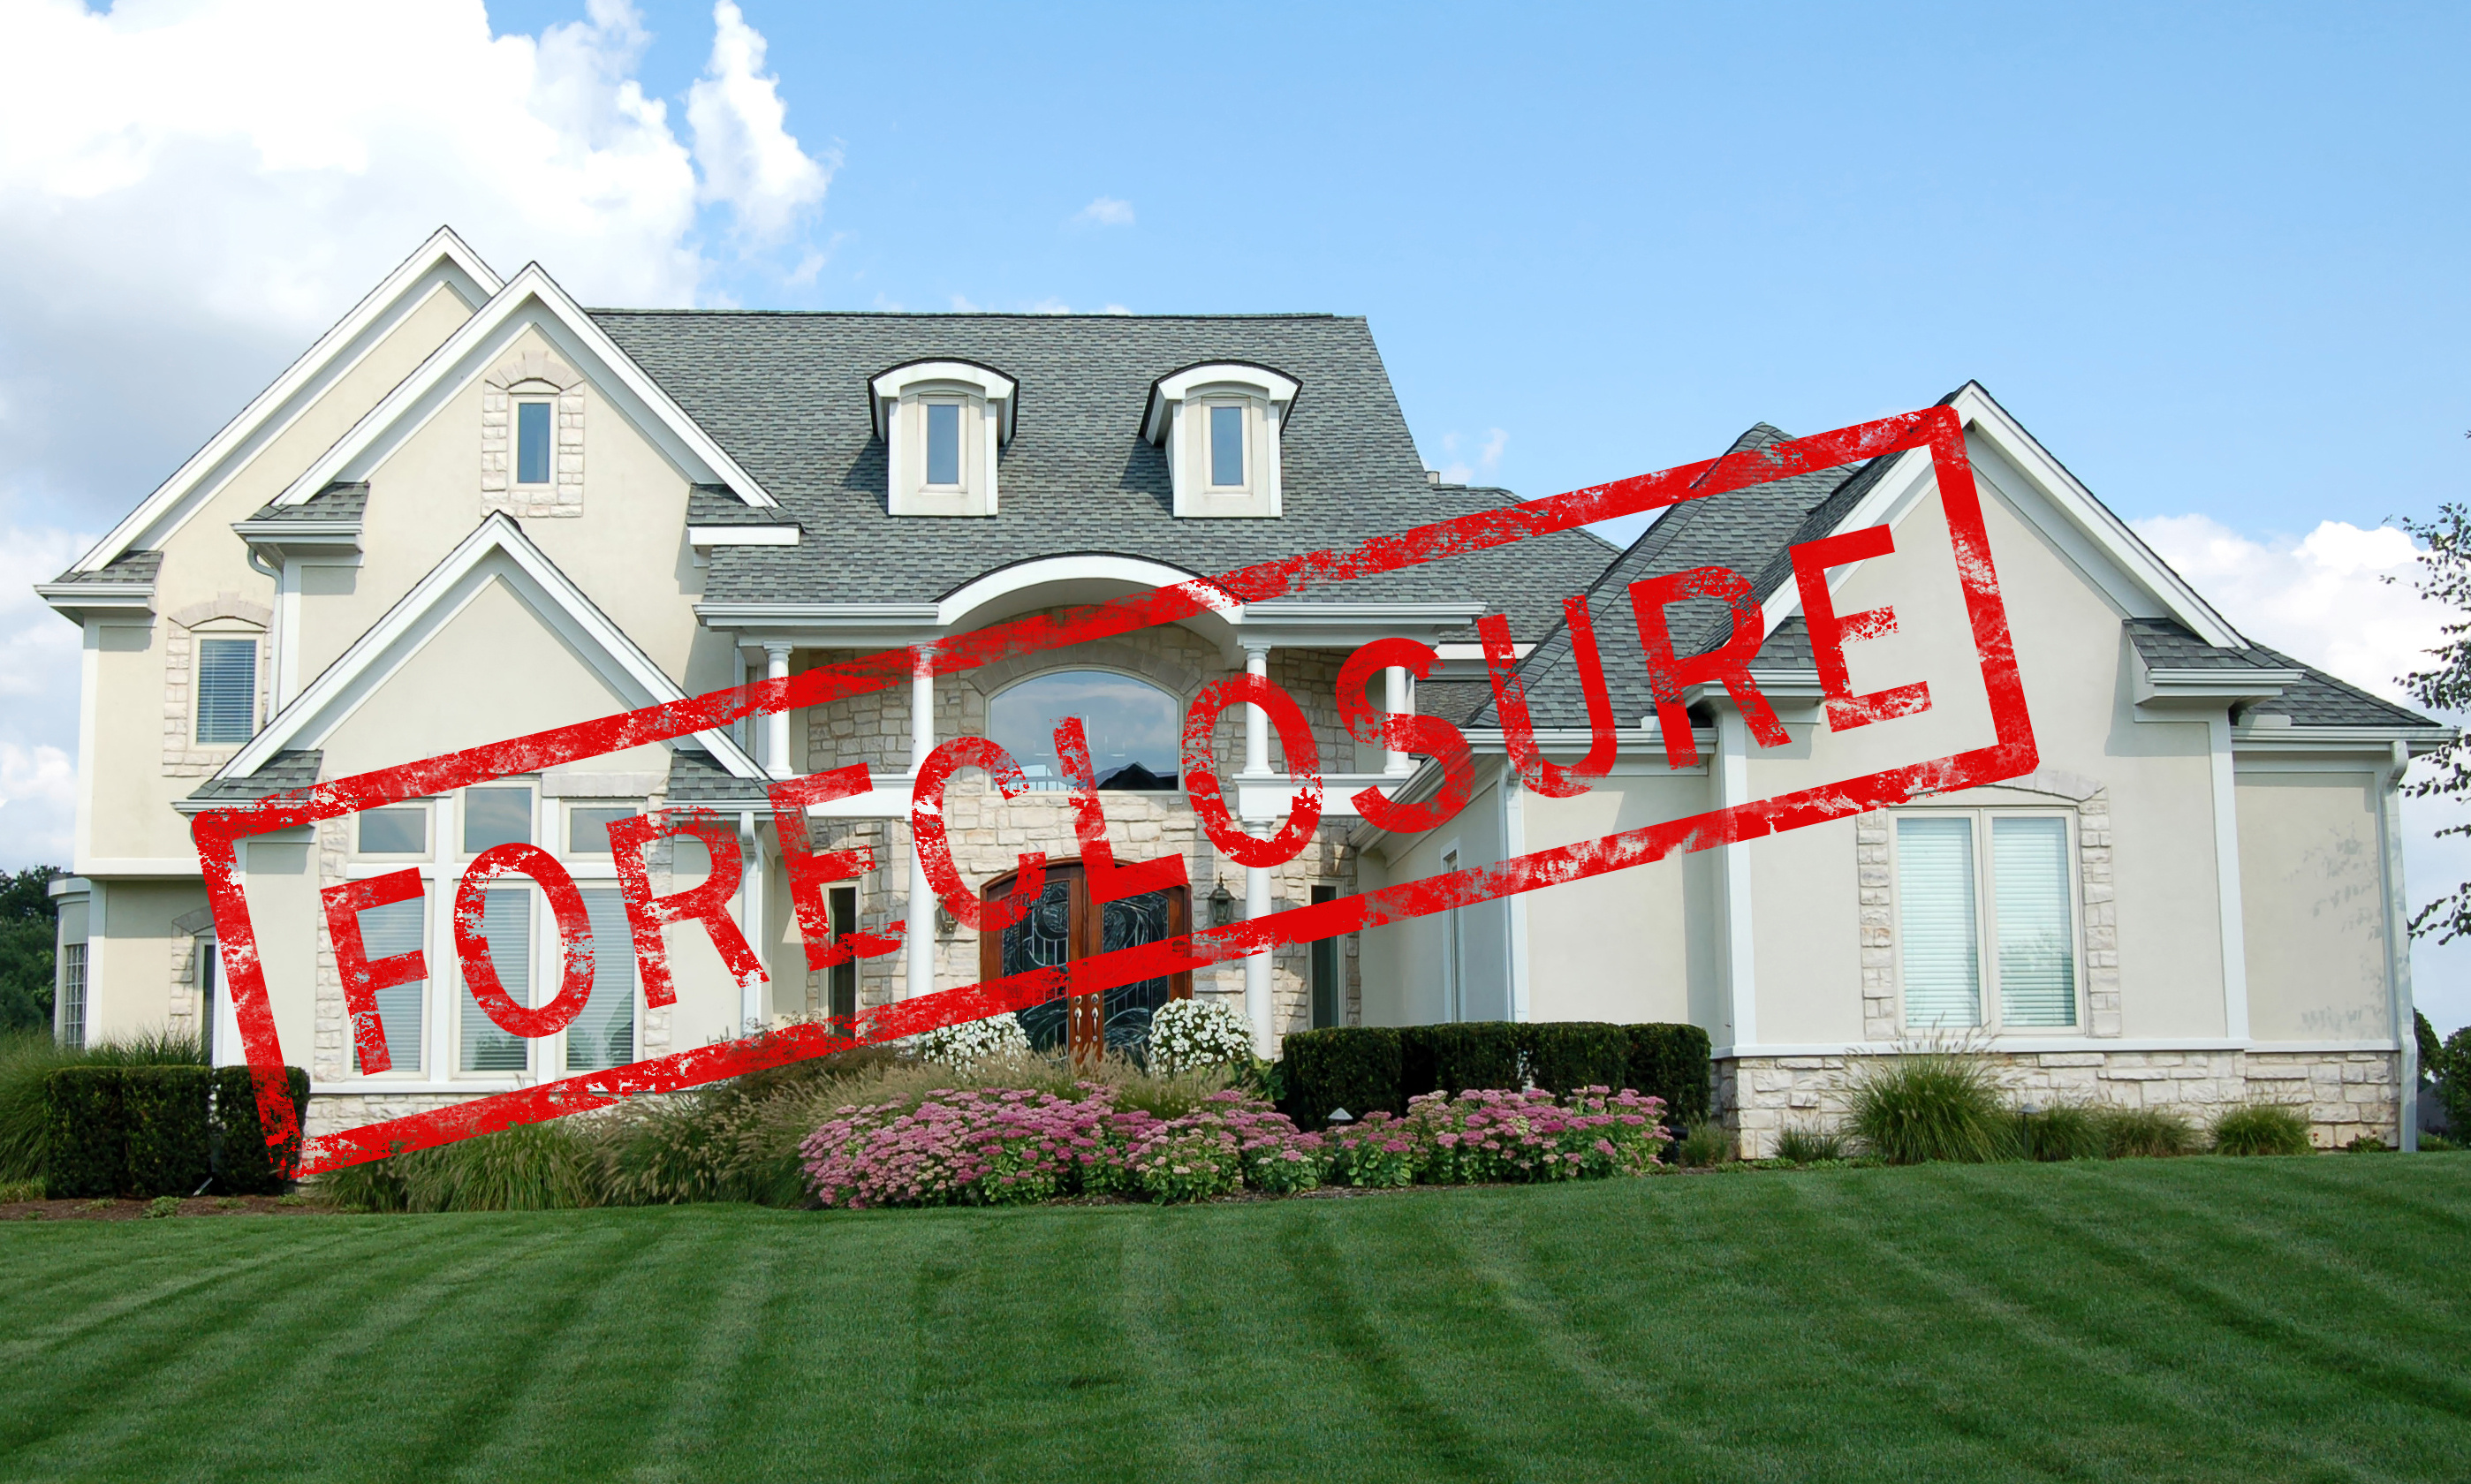 Call Andy Ceberio Appraisal Services to order appraisals regarding Monroe foreclosures